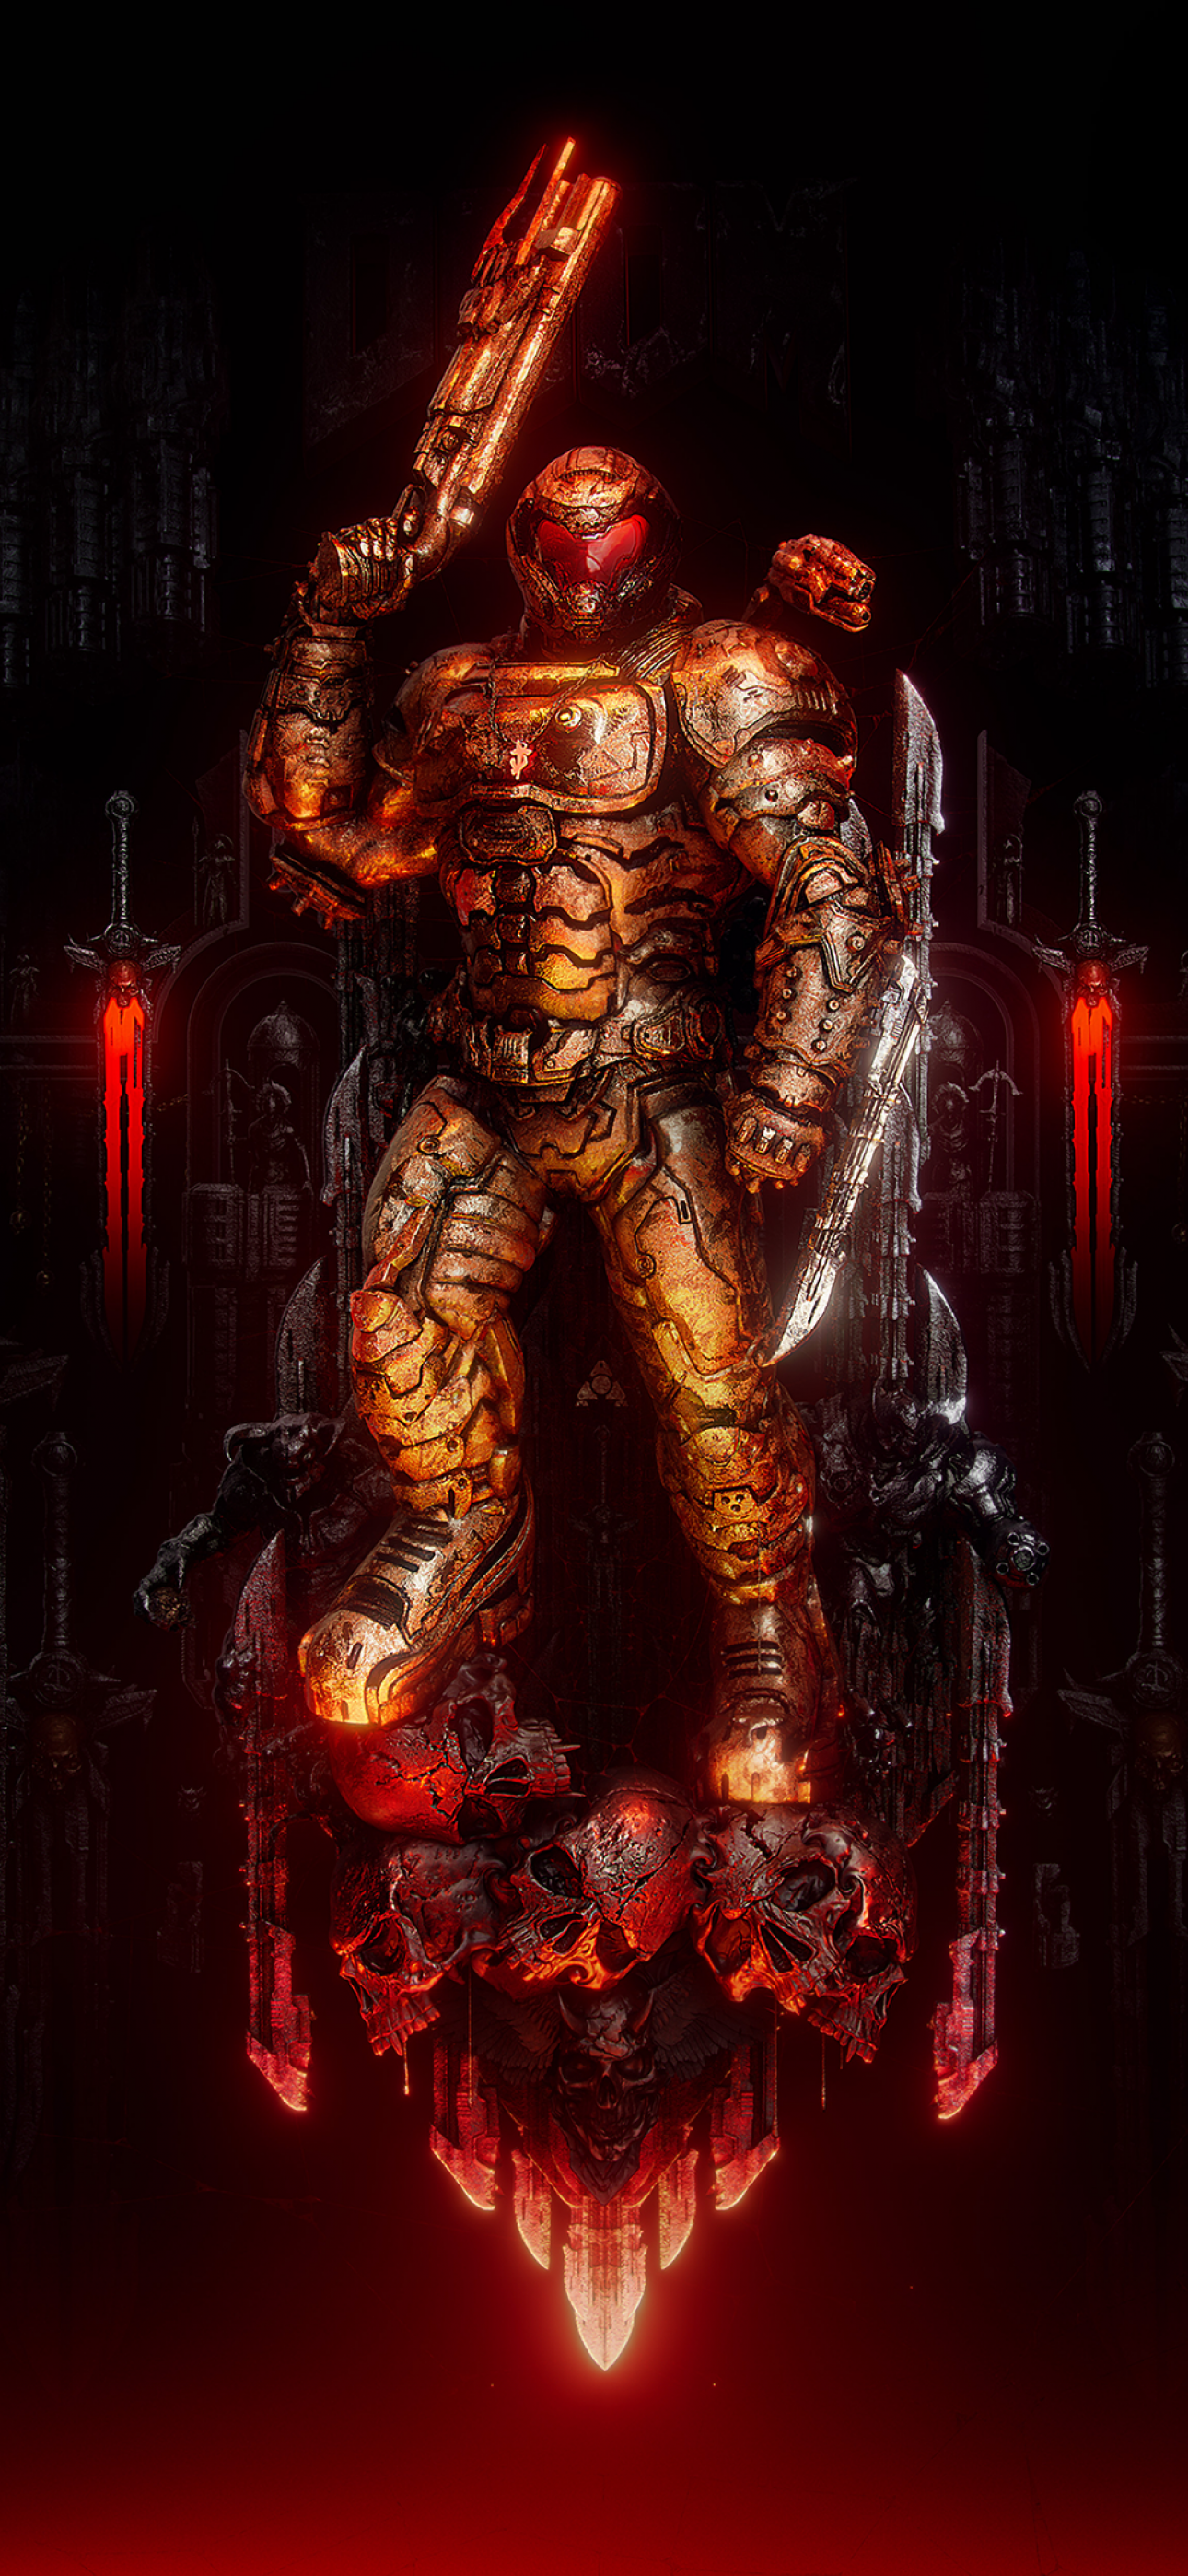 Doom Slayer wallpaper by JulioGremory on DeviantArt